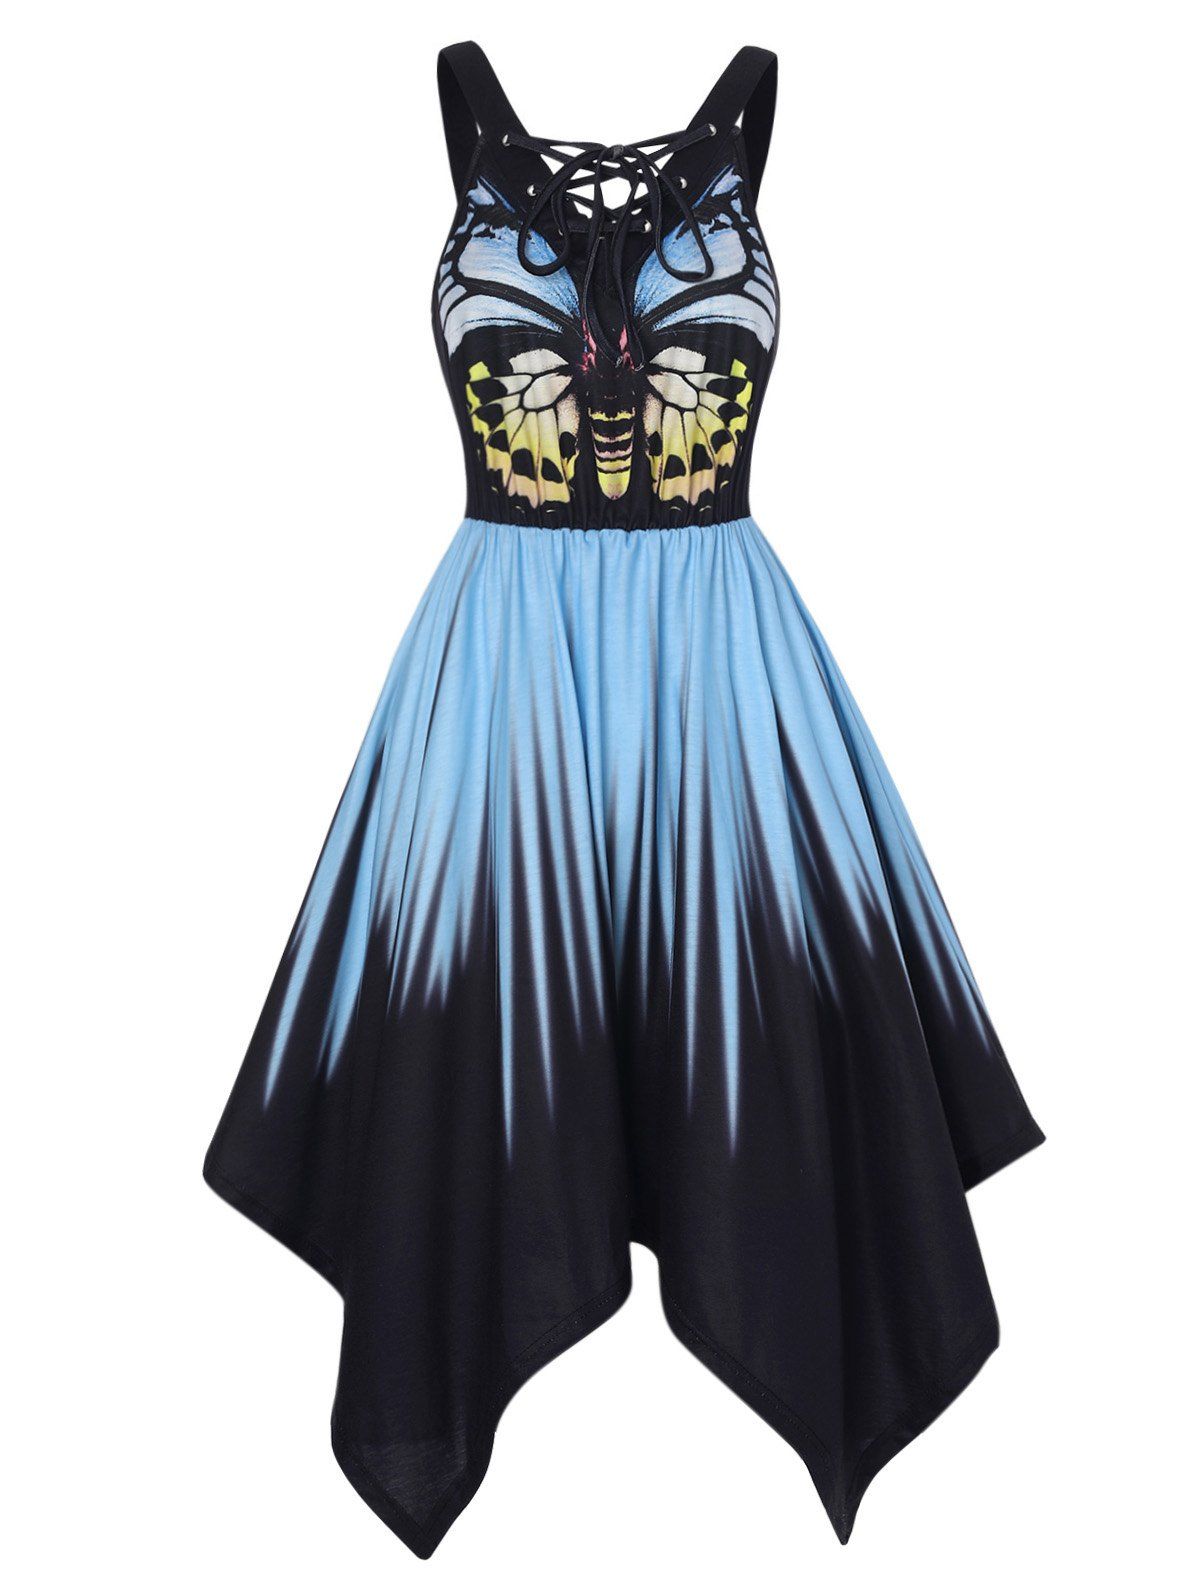 Bohemian Midi Casual Dress Butterfly Print Contrast Colorblock Handkerchief Lace Up High Waist Summer Dress - multicolor XL